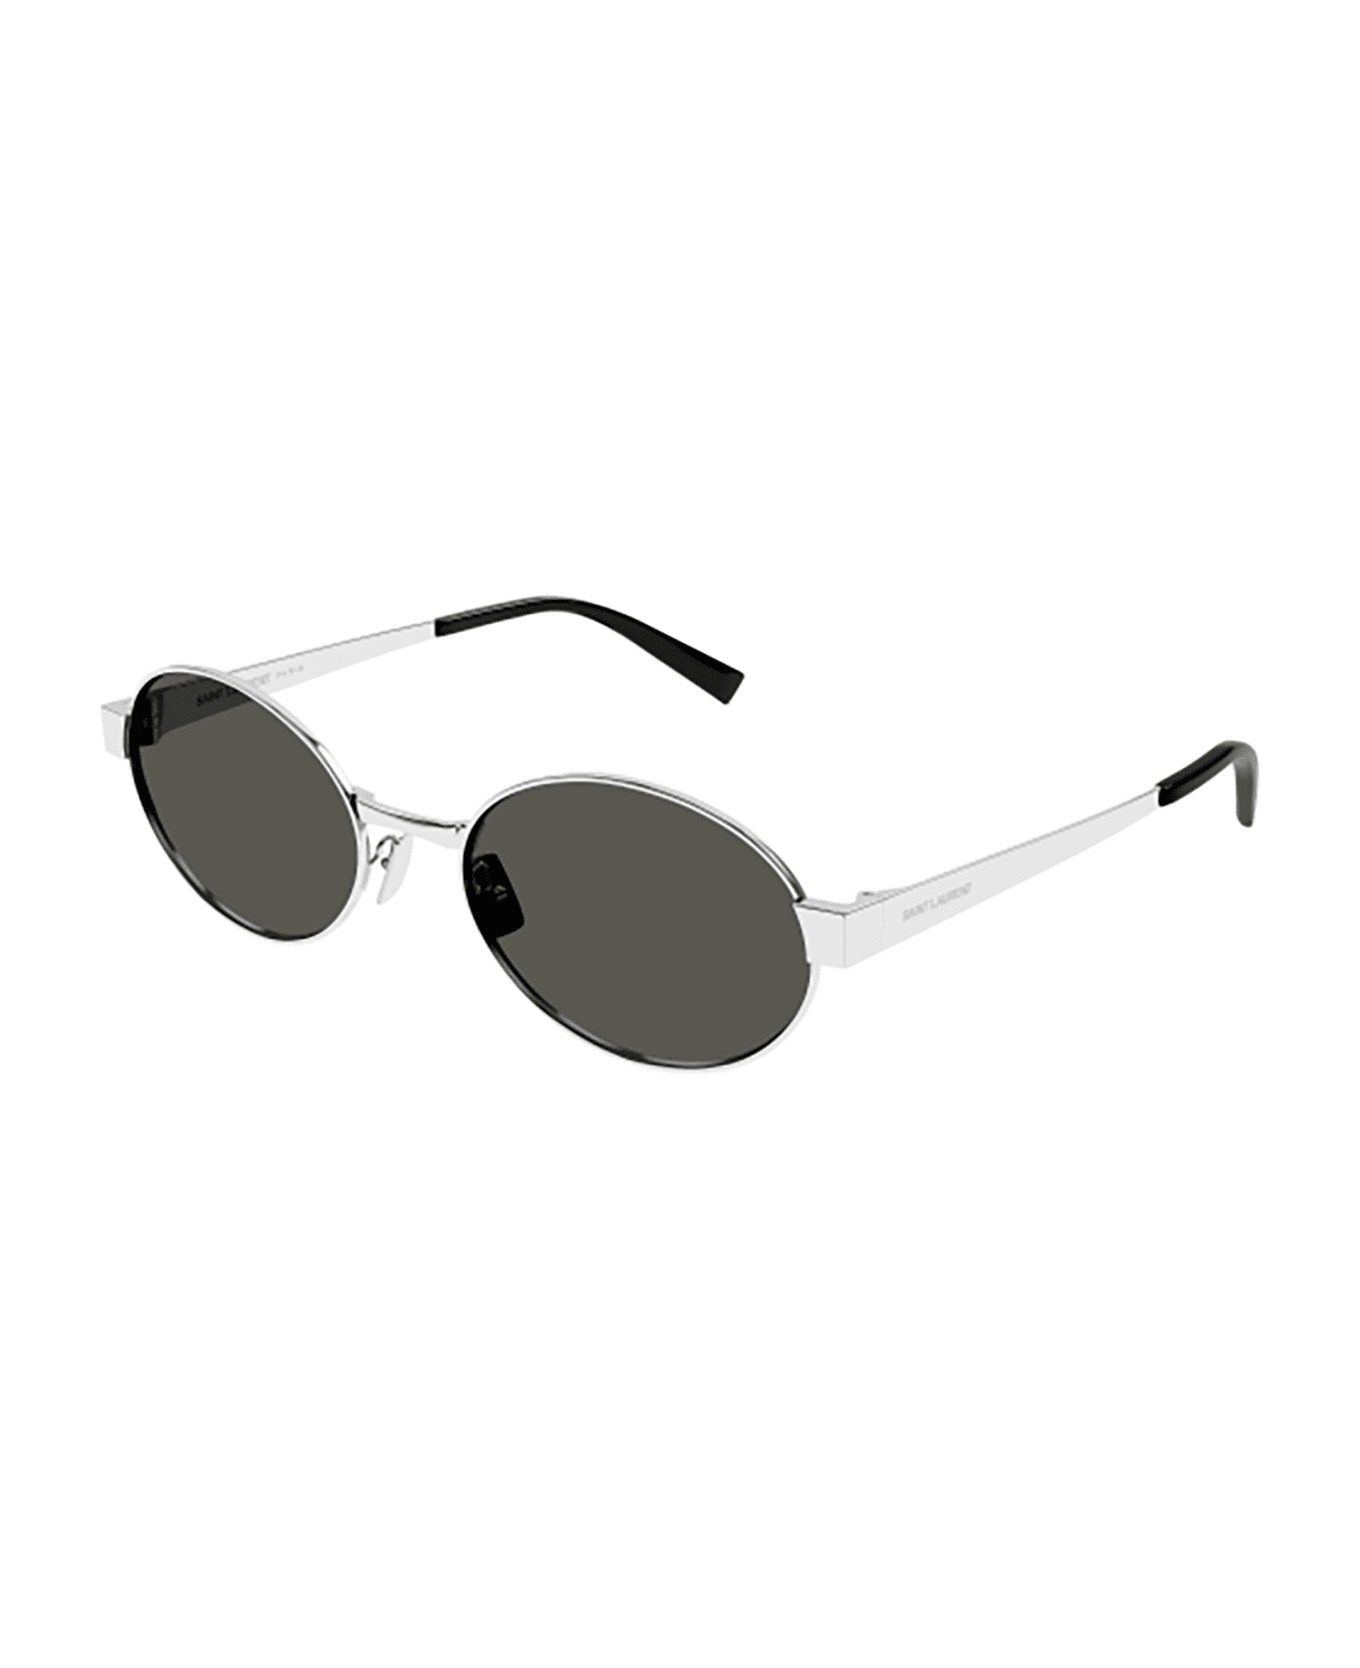 Saint Laurent Eyewear Sl 692 Sunglasses - 002 silver silver grey